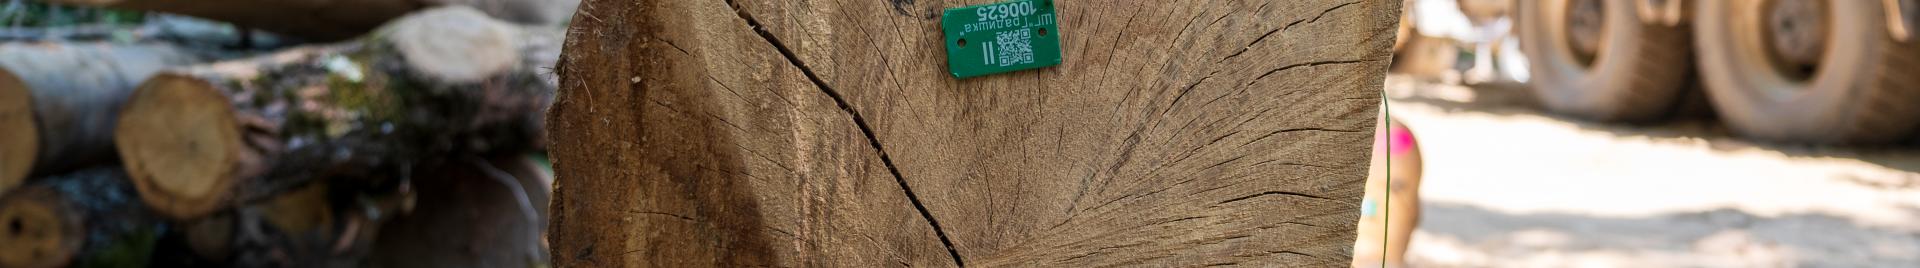 Timber log geolocation QR code